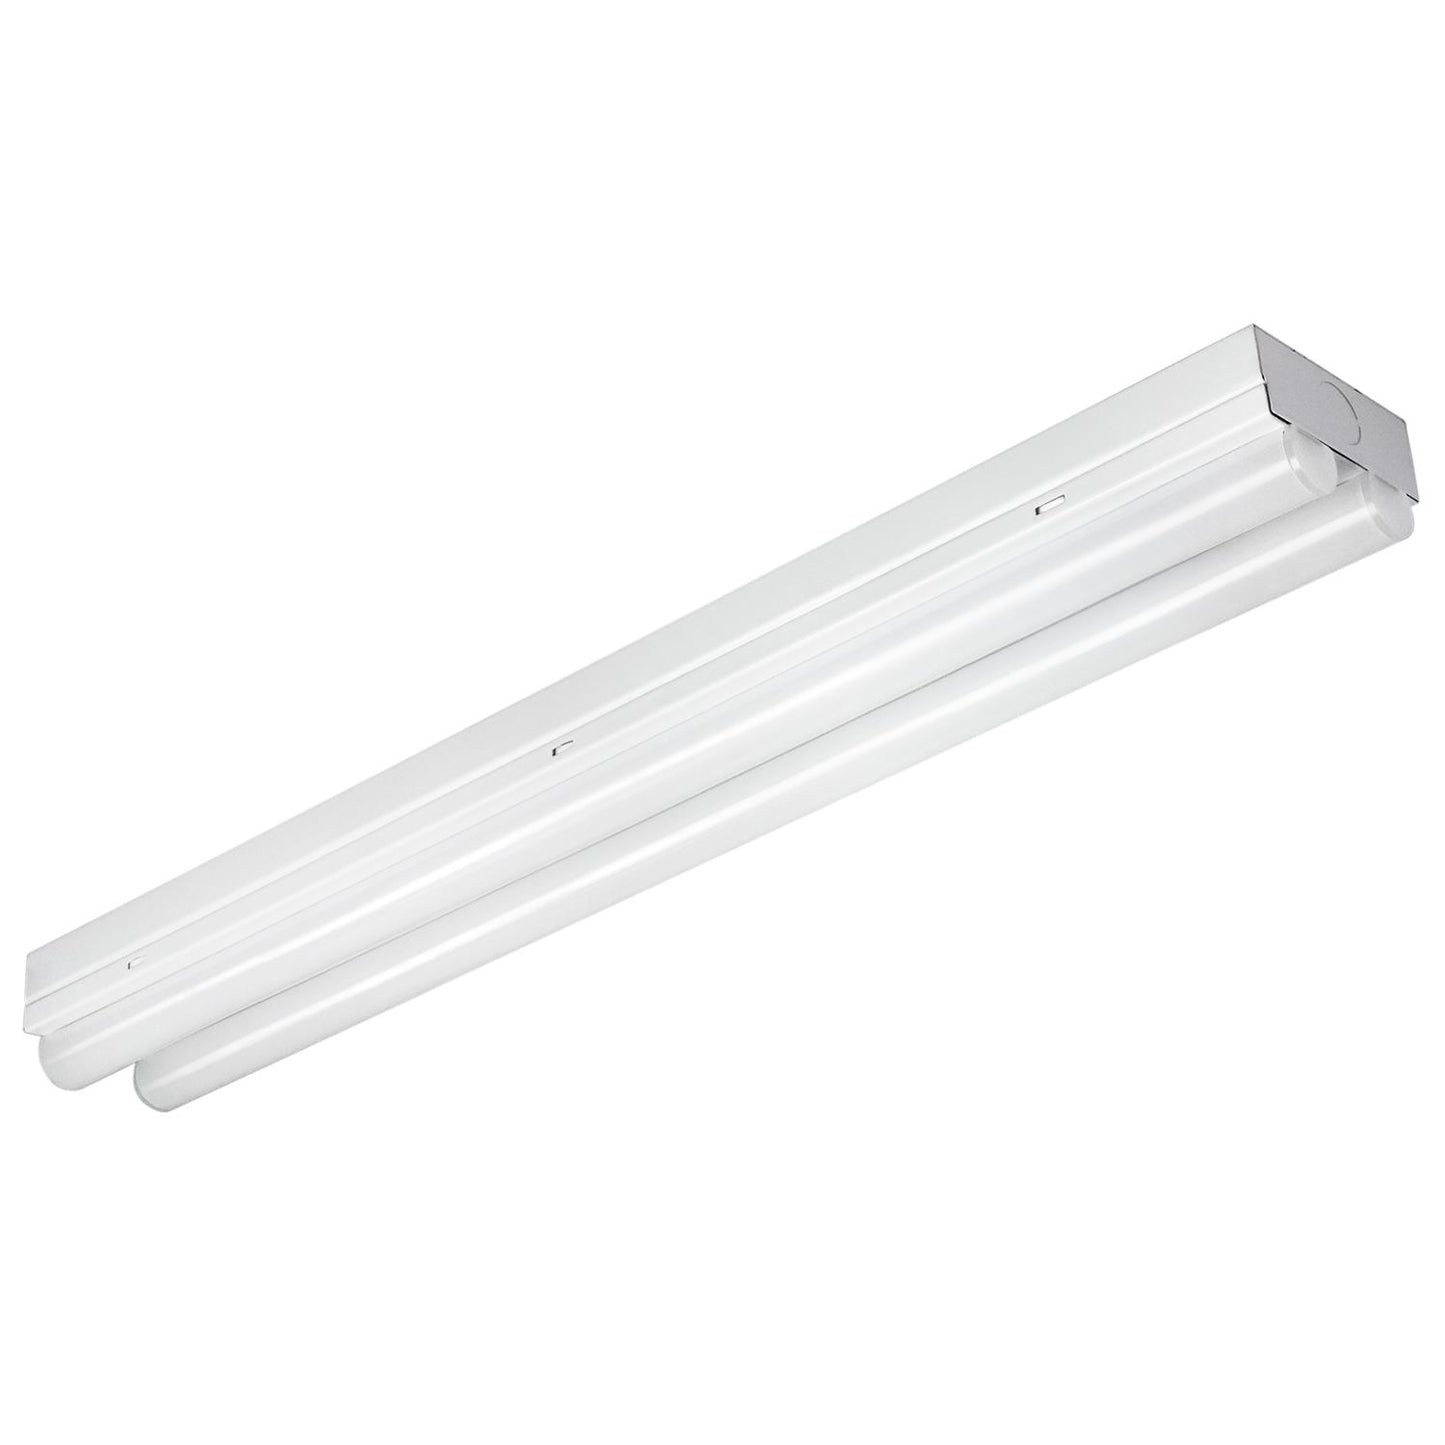 Sunlite LED 24" Linear Dual Strip Fixture, 15 Watts, 4000K Cool White, 1850 Lumen